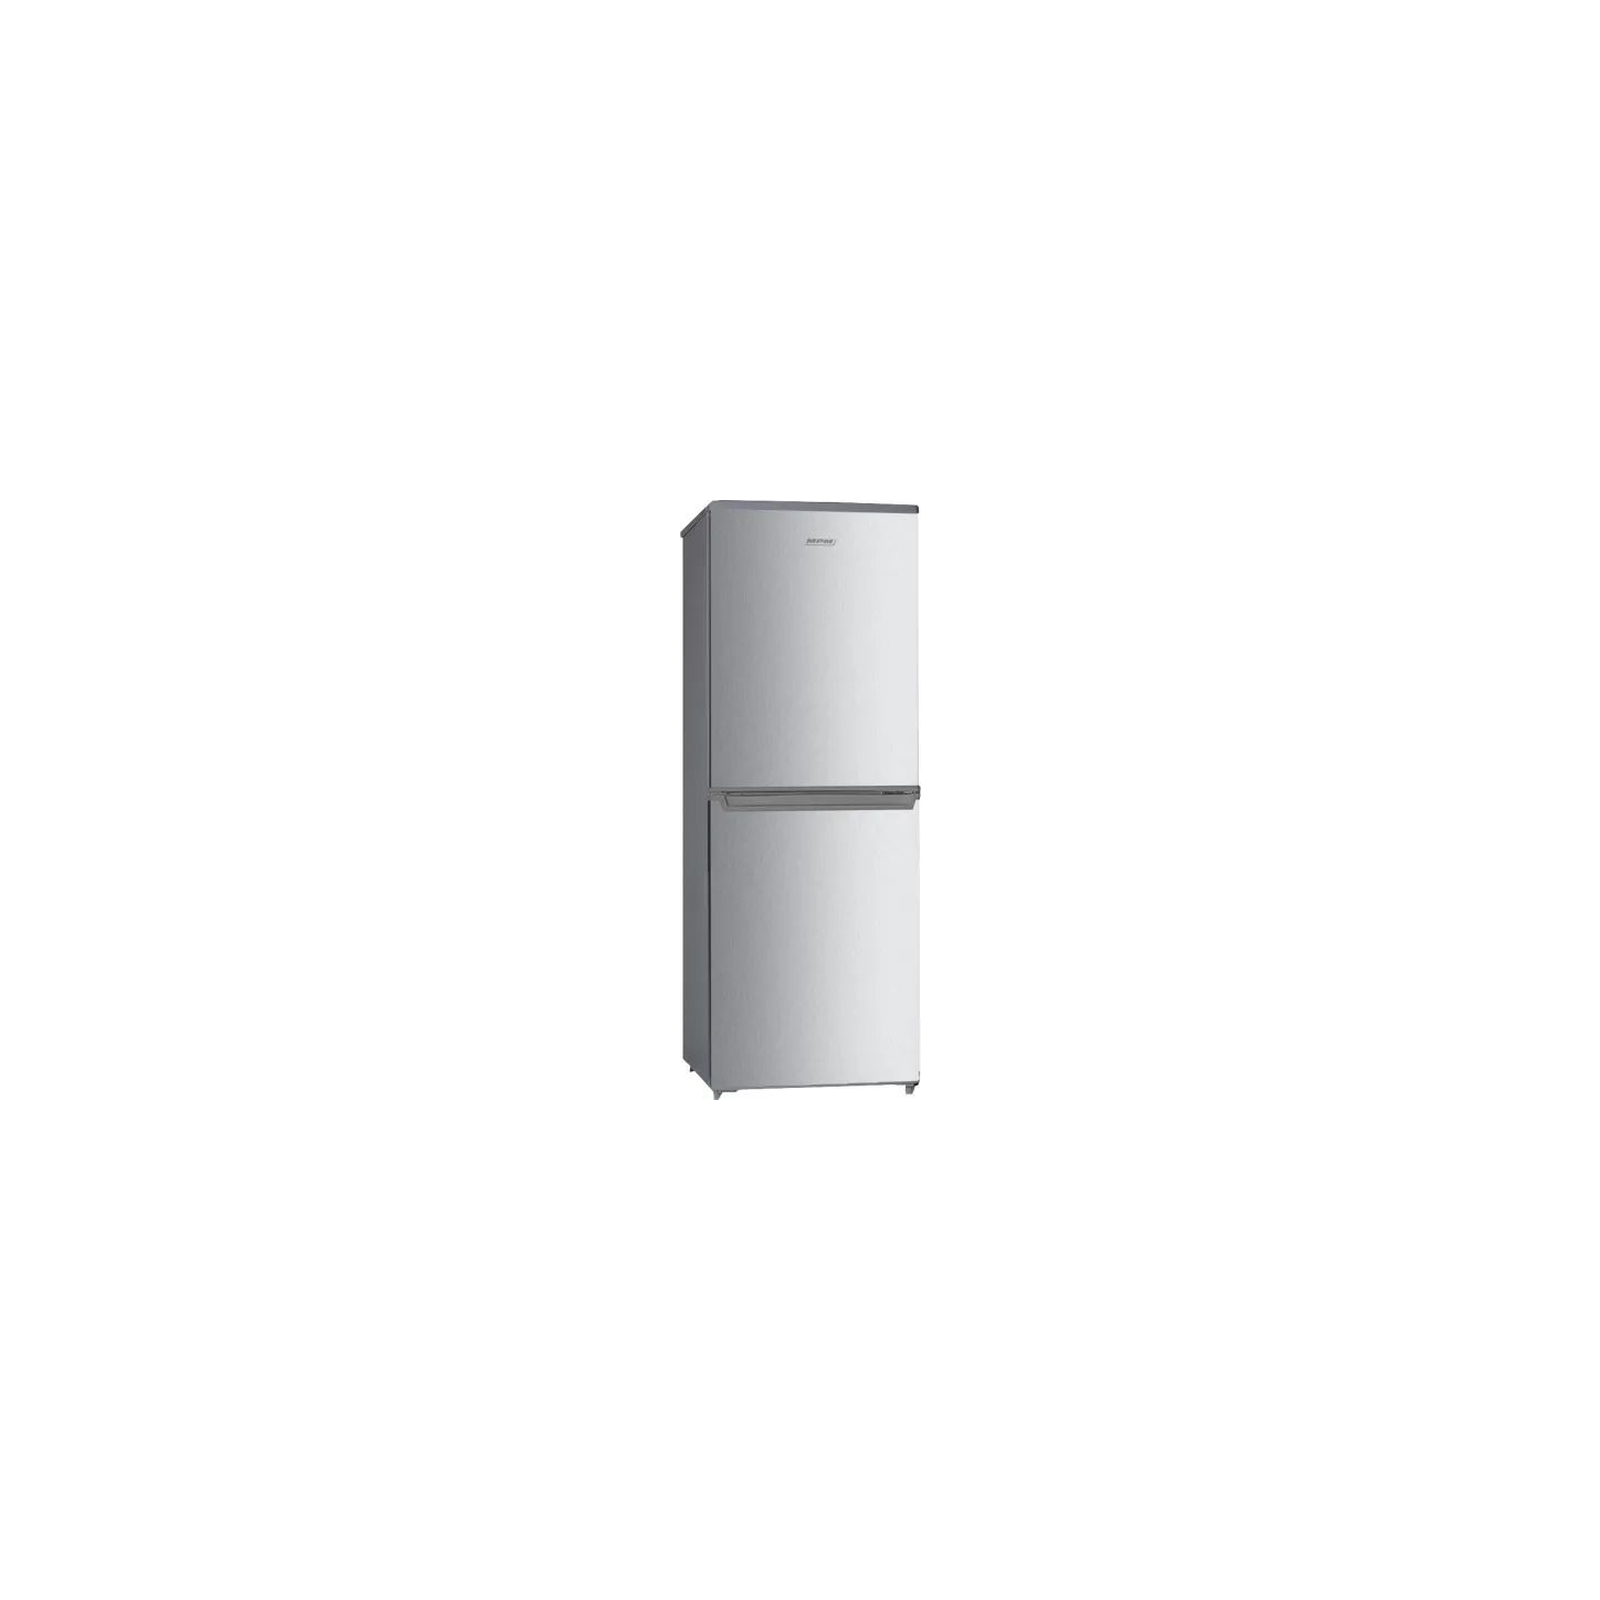 Холодильник MPM MPM-215-KB-39/E